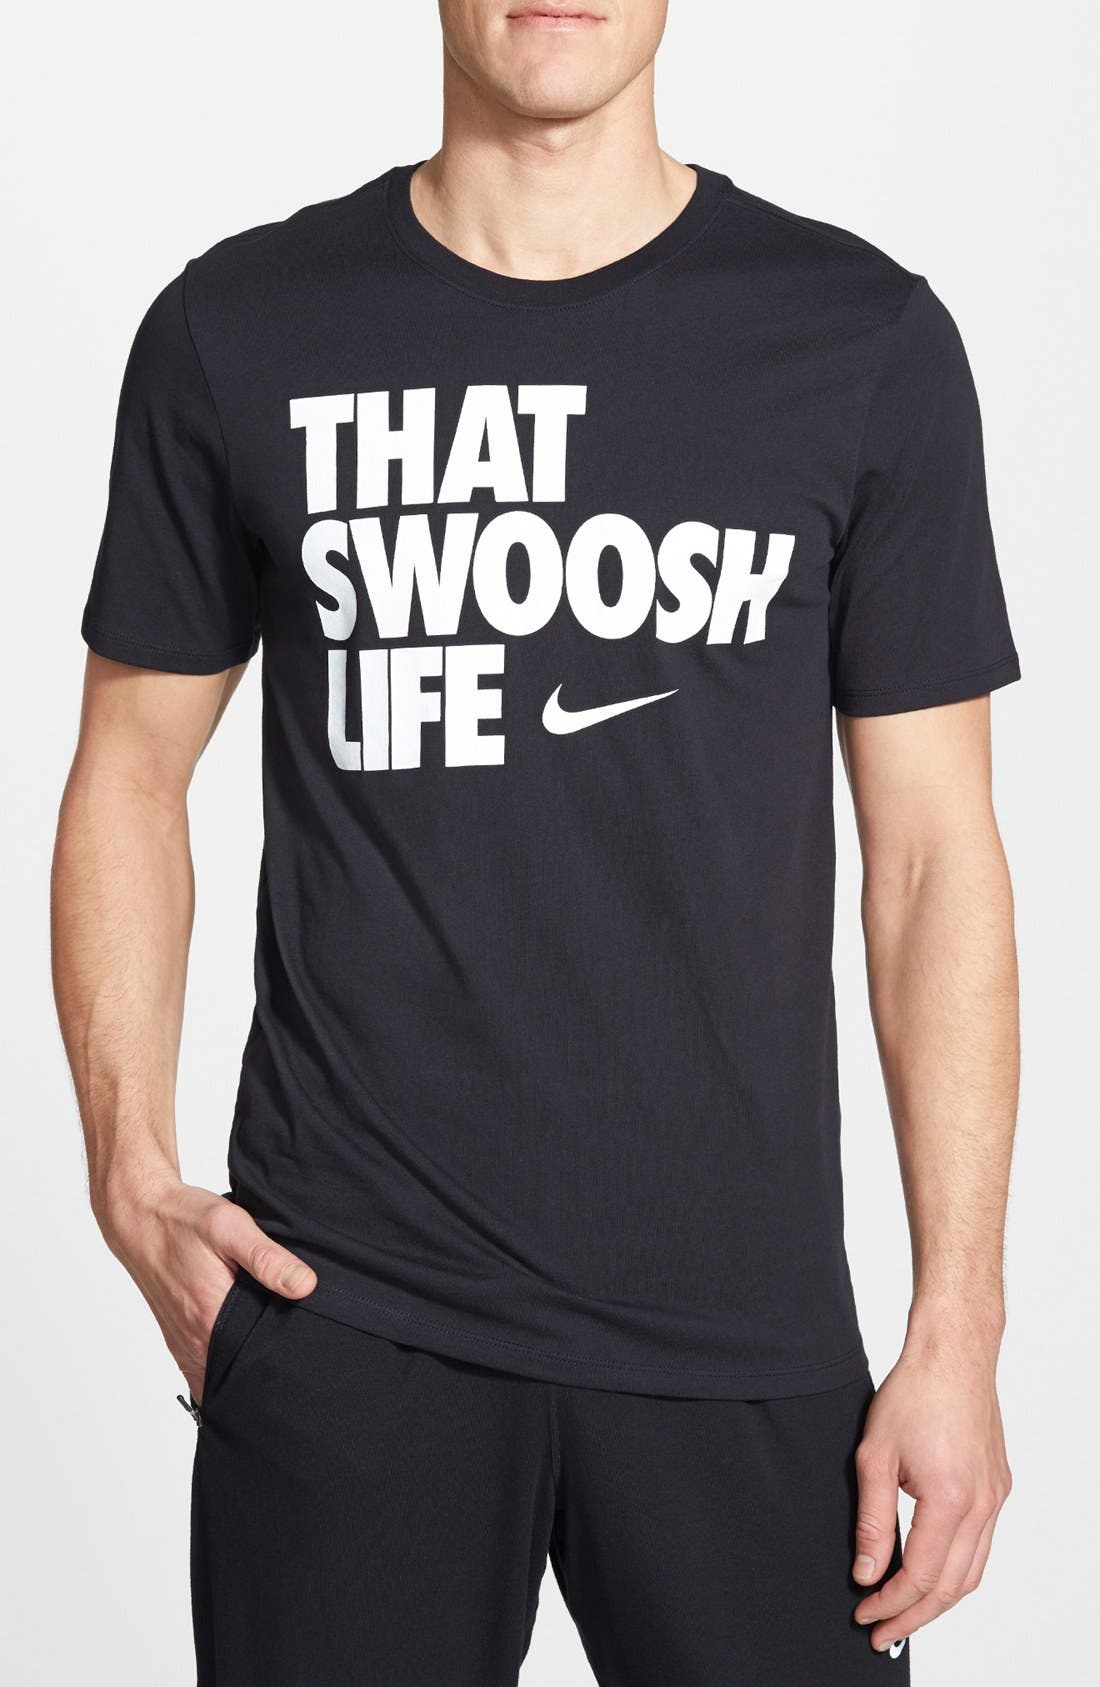 that swoosh life t shirt